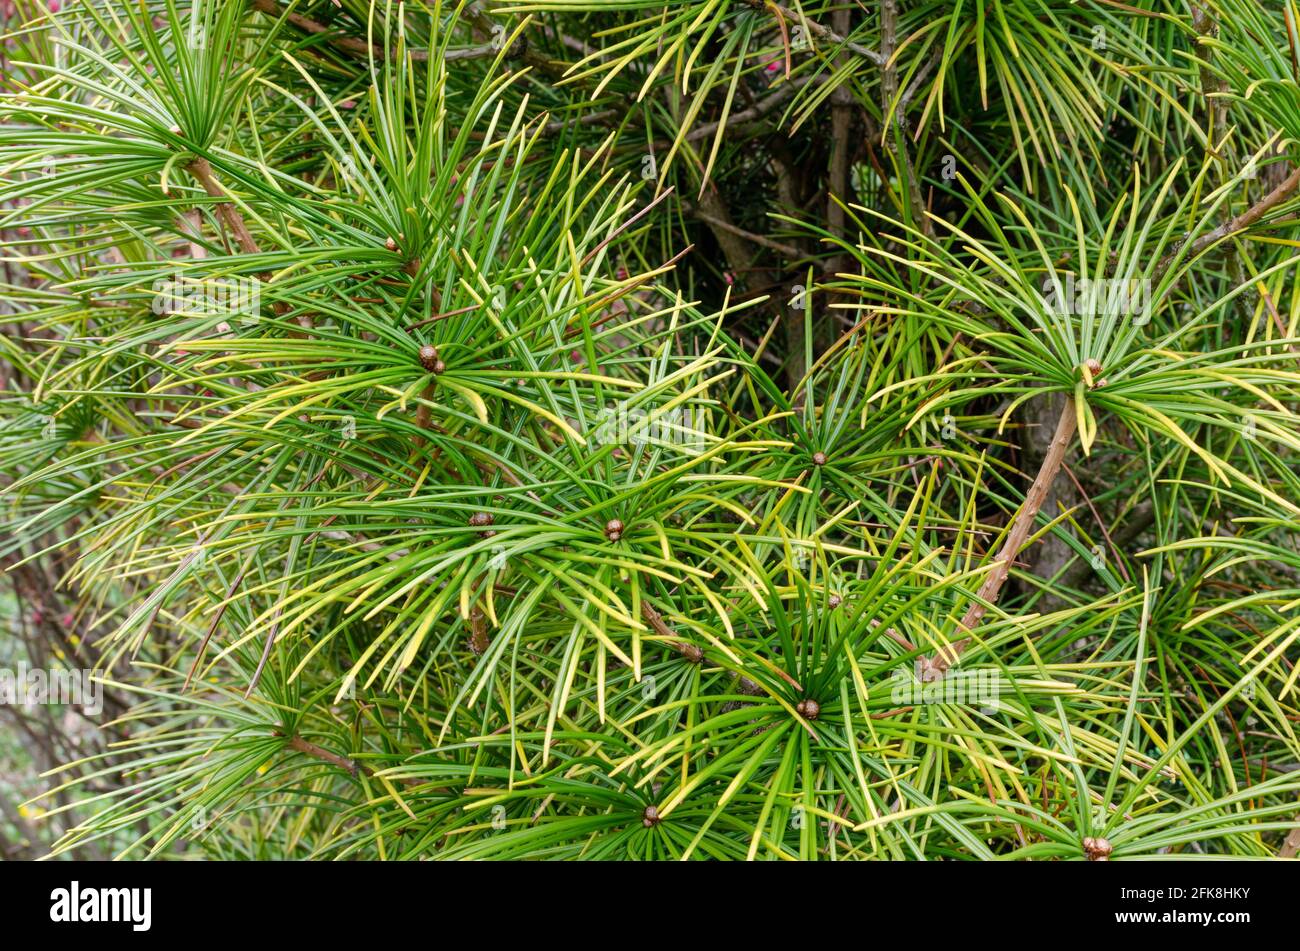 Rare endangered plant - Sciadopitys verticillata - Umbrella Pine in botany in Poland. Stock Photo